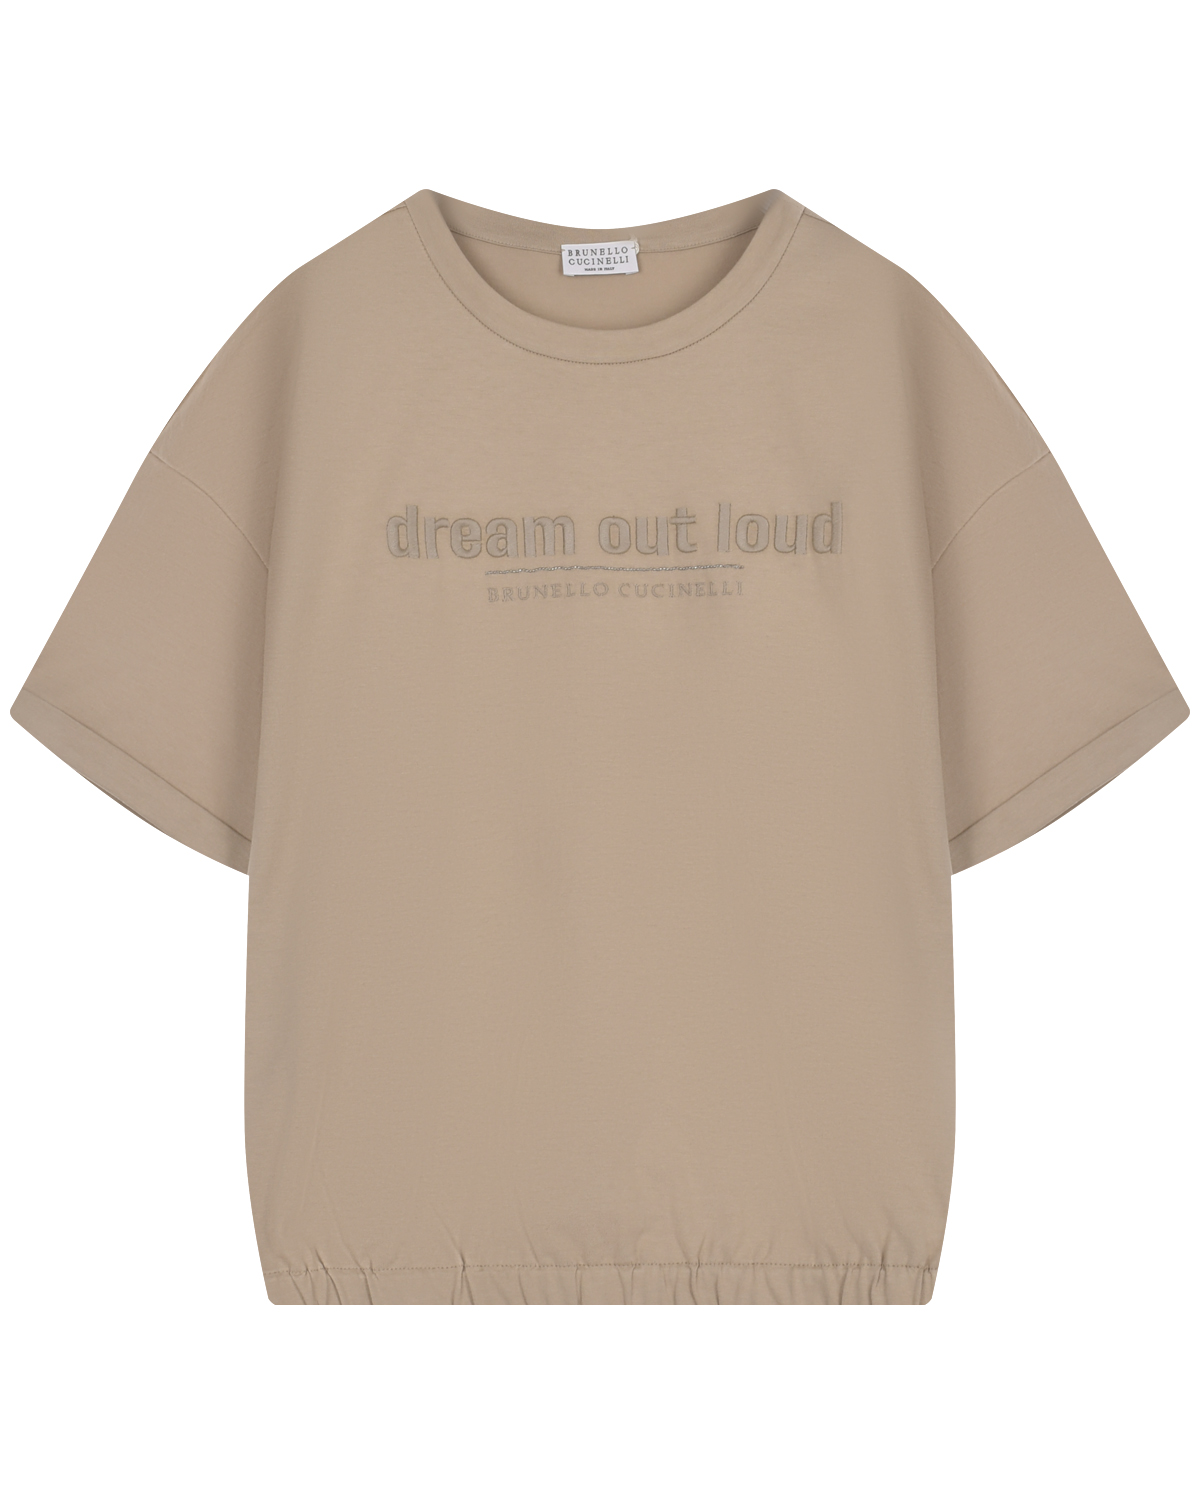 Бежевая футболка с принтом "dream out loud" Brunello Cucinelli